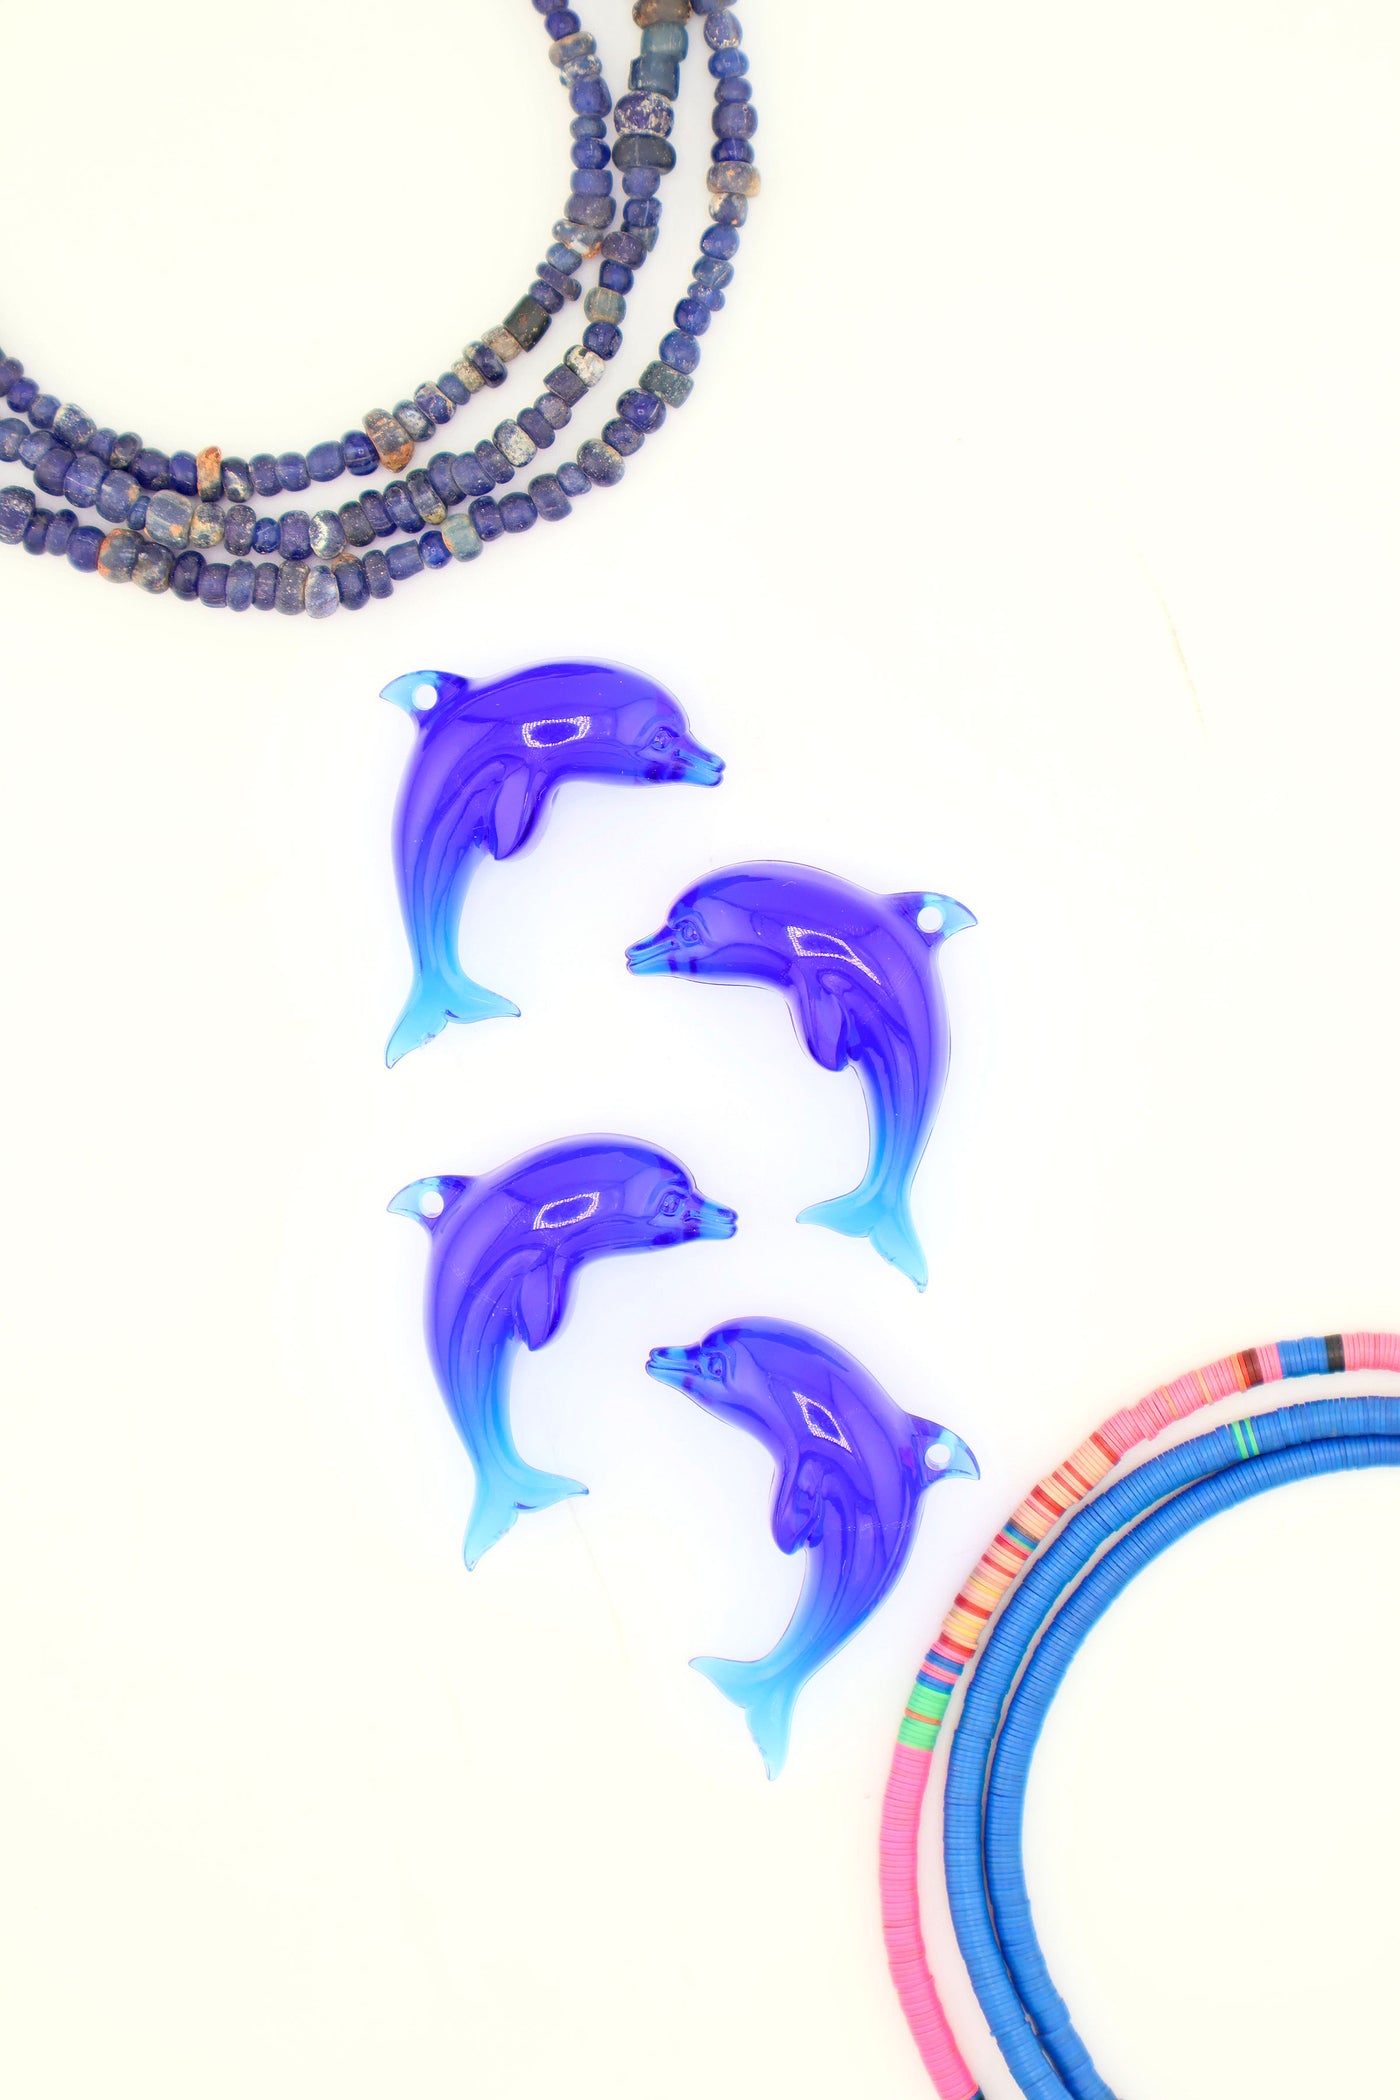 Cobalt Blue Dolphin Resin Pendant, 45mm, 1 Charm for DIY beachy mermaid jewelry